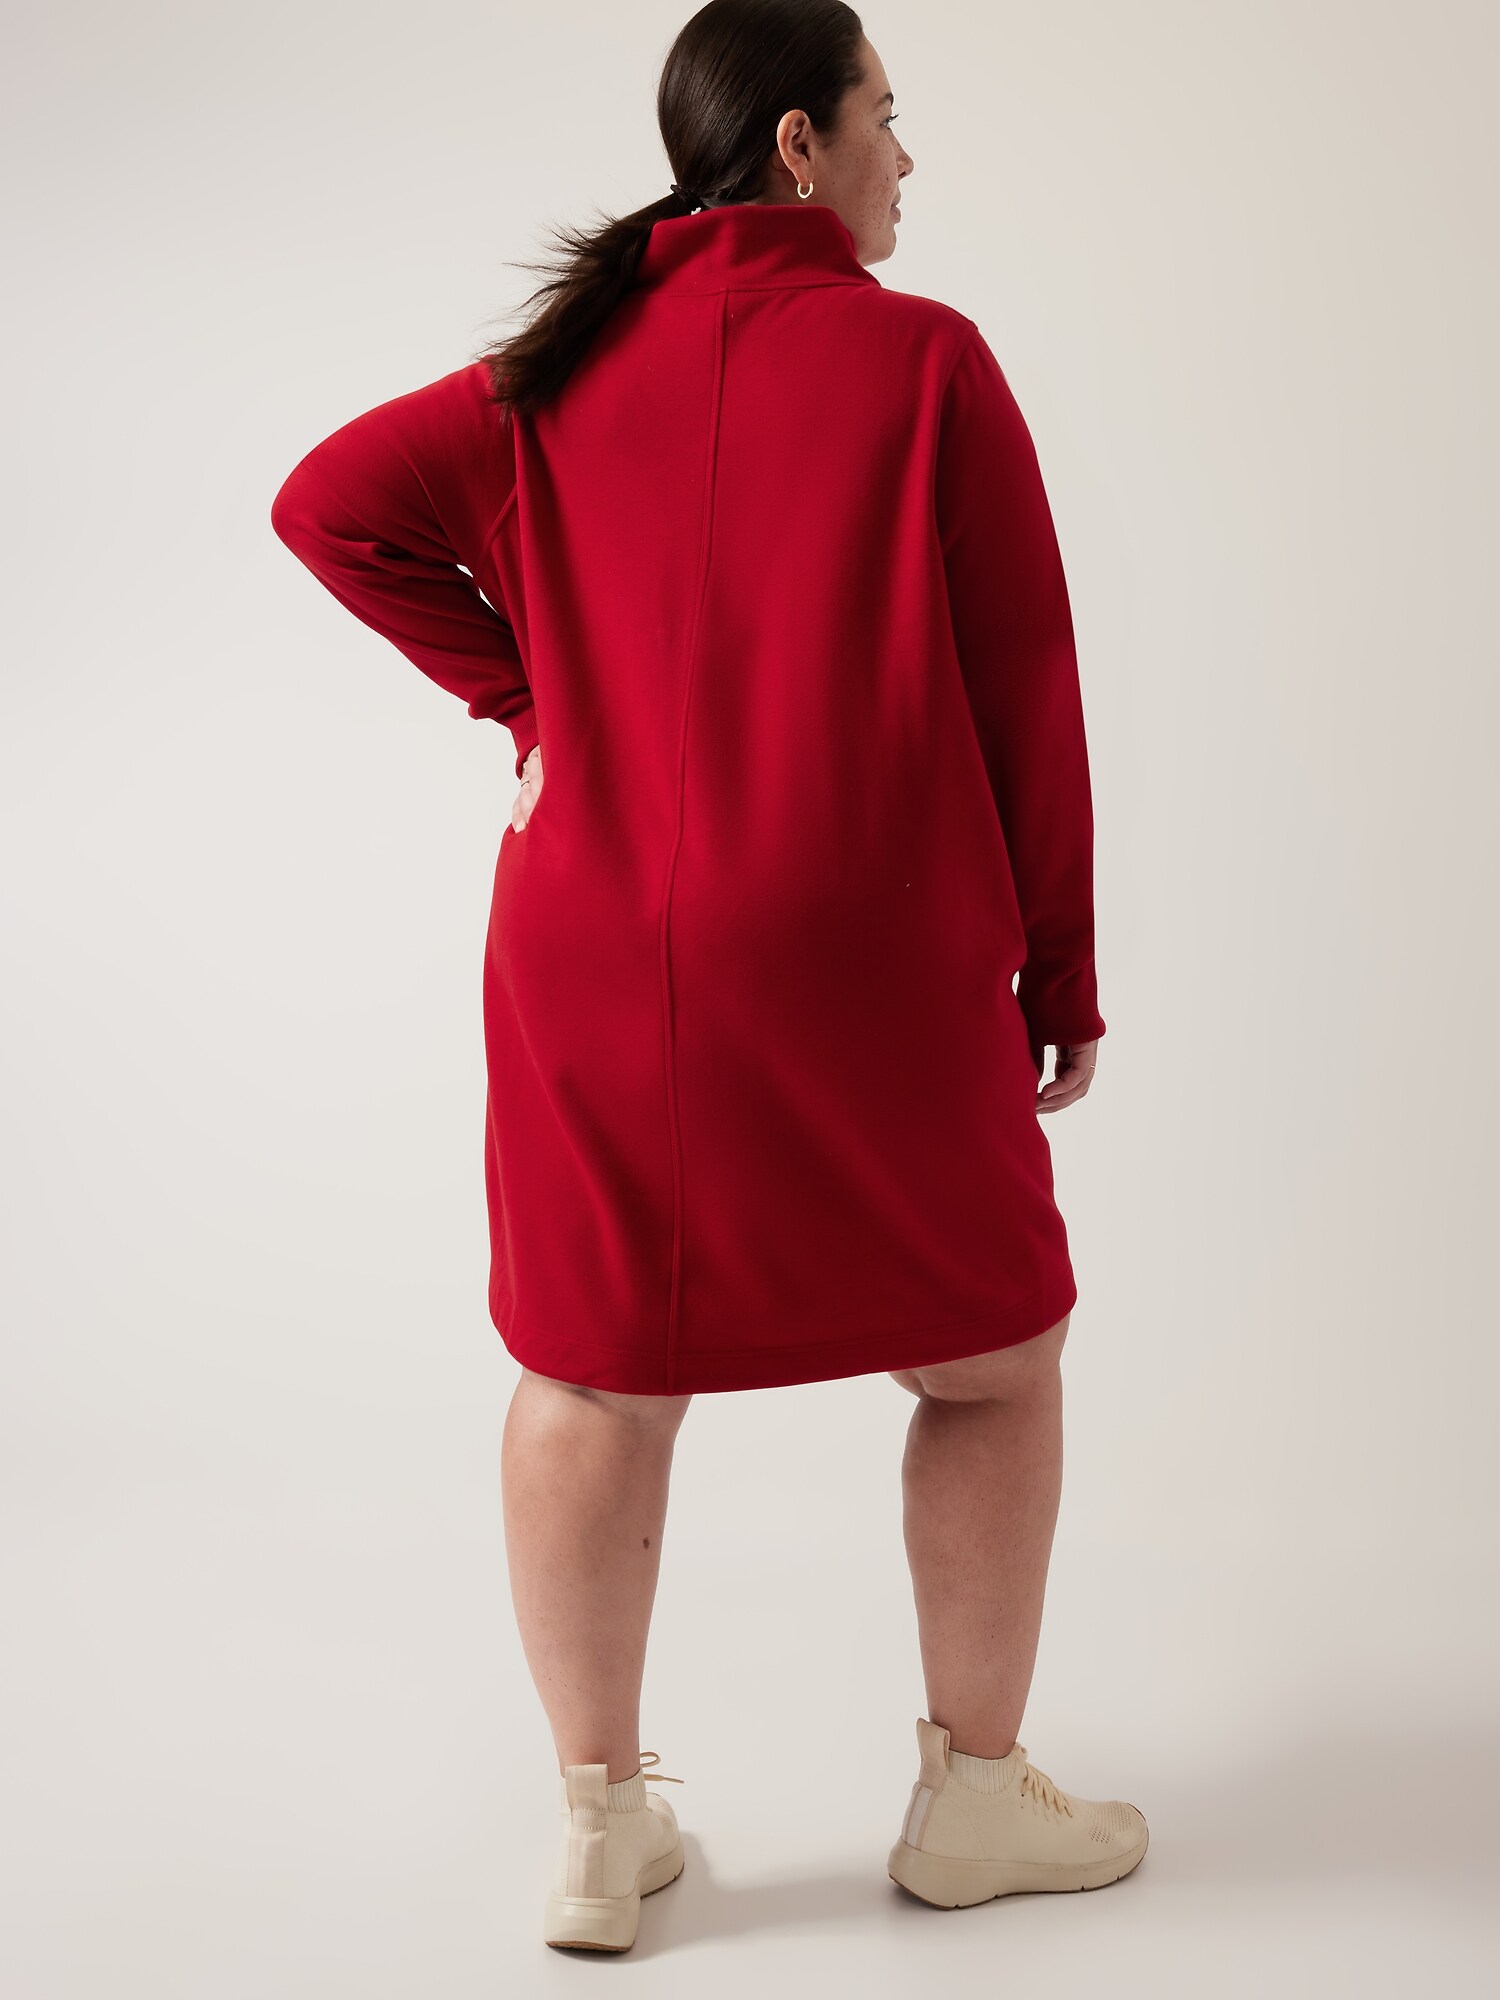 Maya Dress Turtleneck Organic Cotton Fleece Tunic Dress With Pockets High  Neck Cozy Winter Dress 